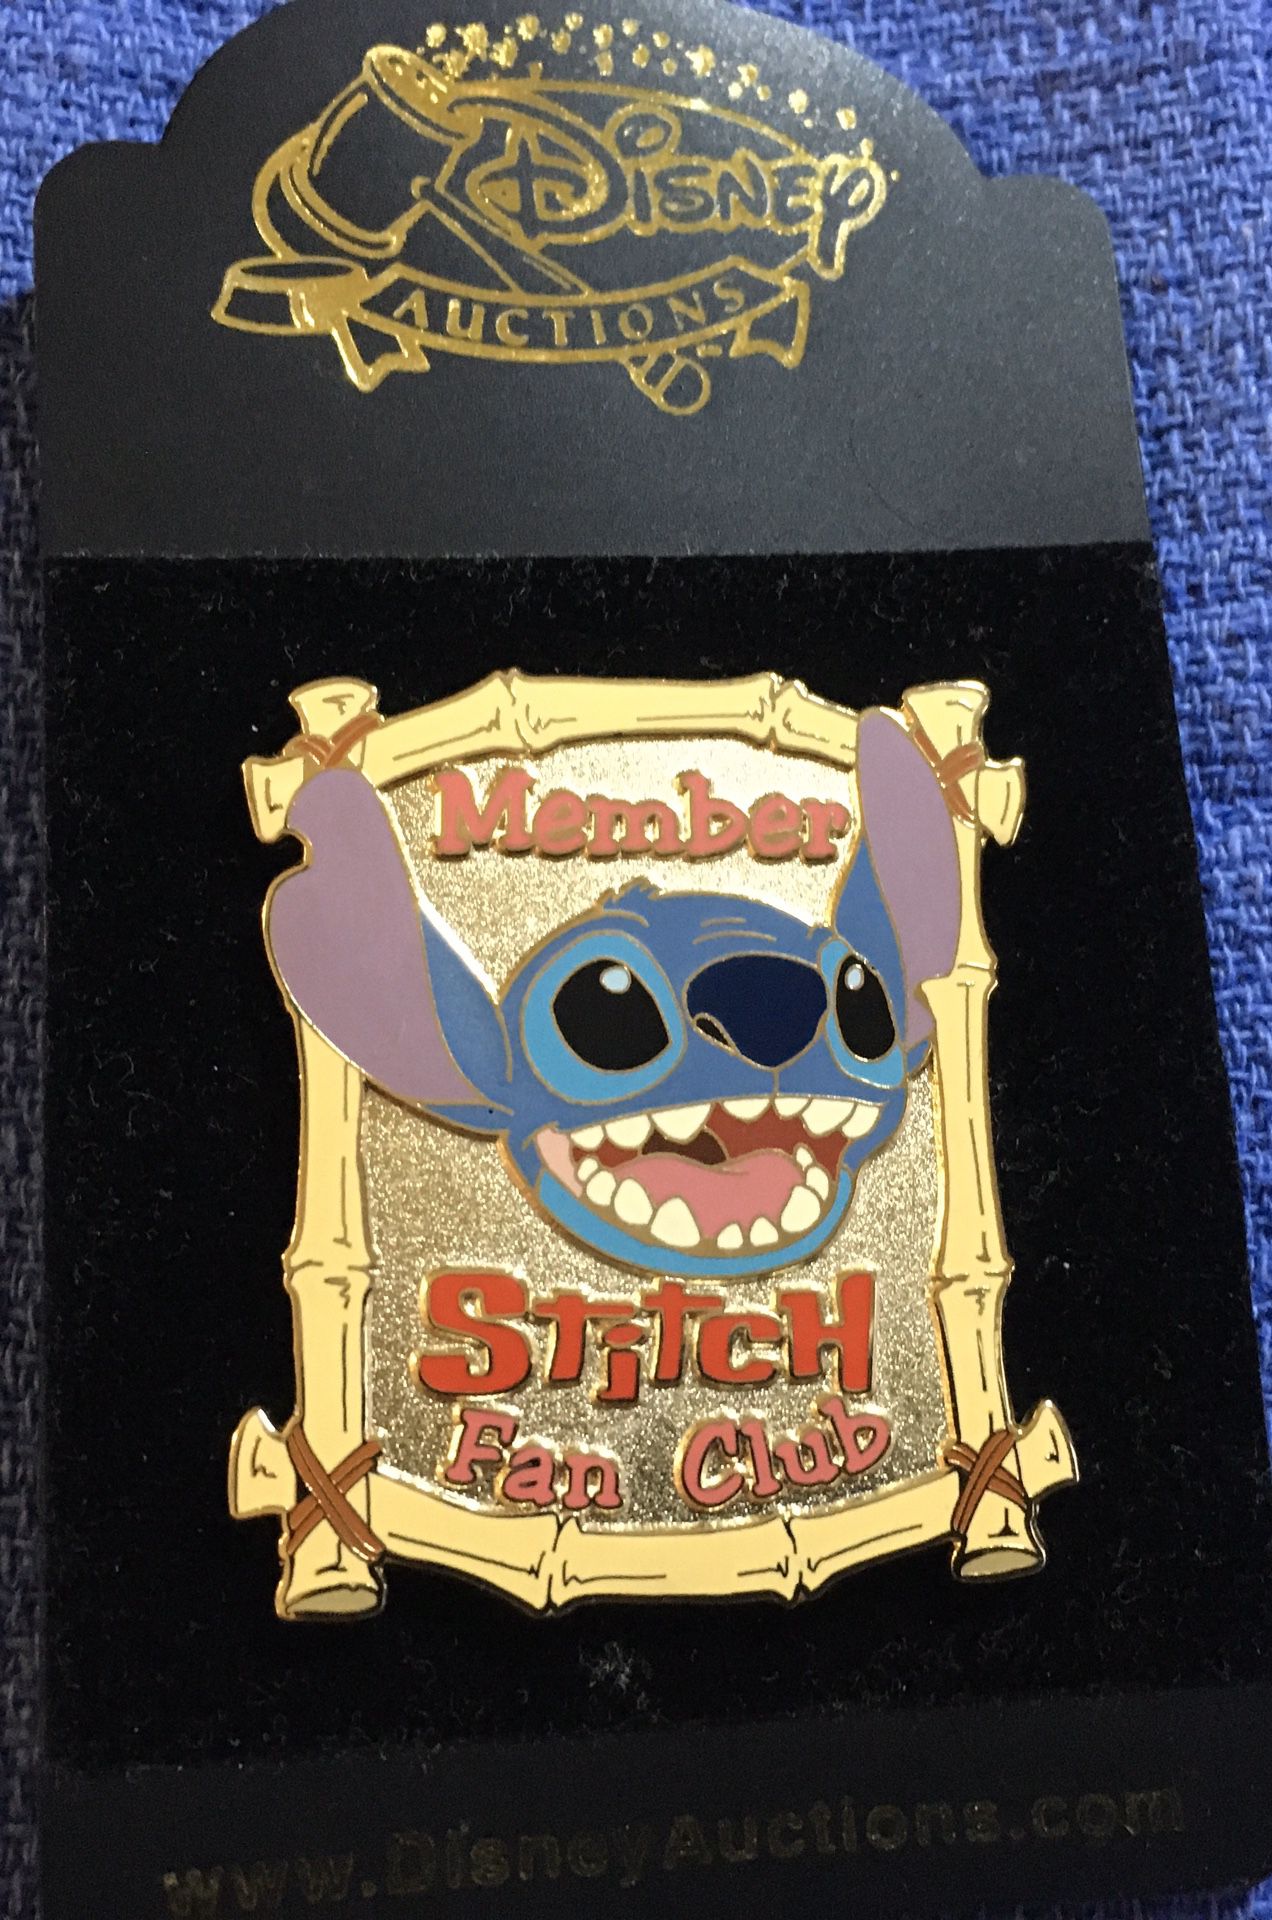 Disney Auctions Stitch pins